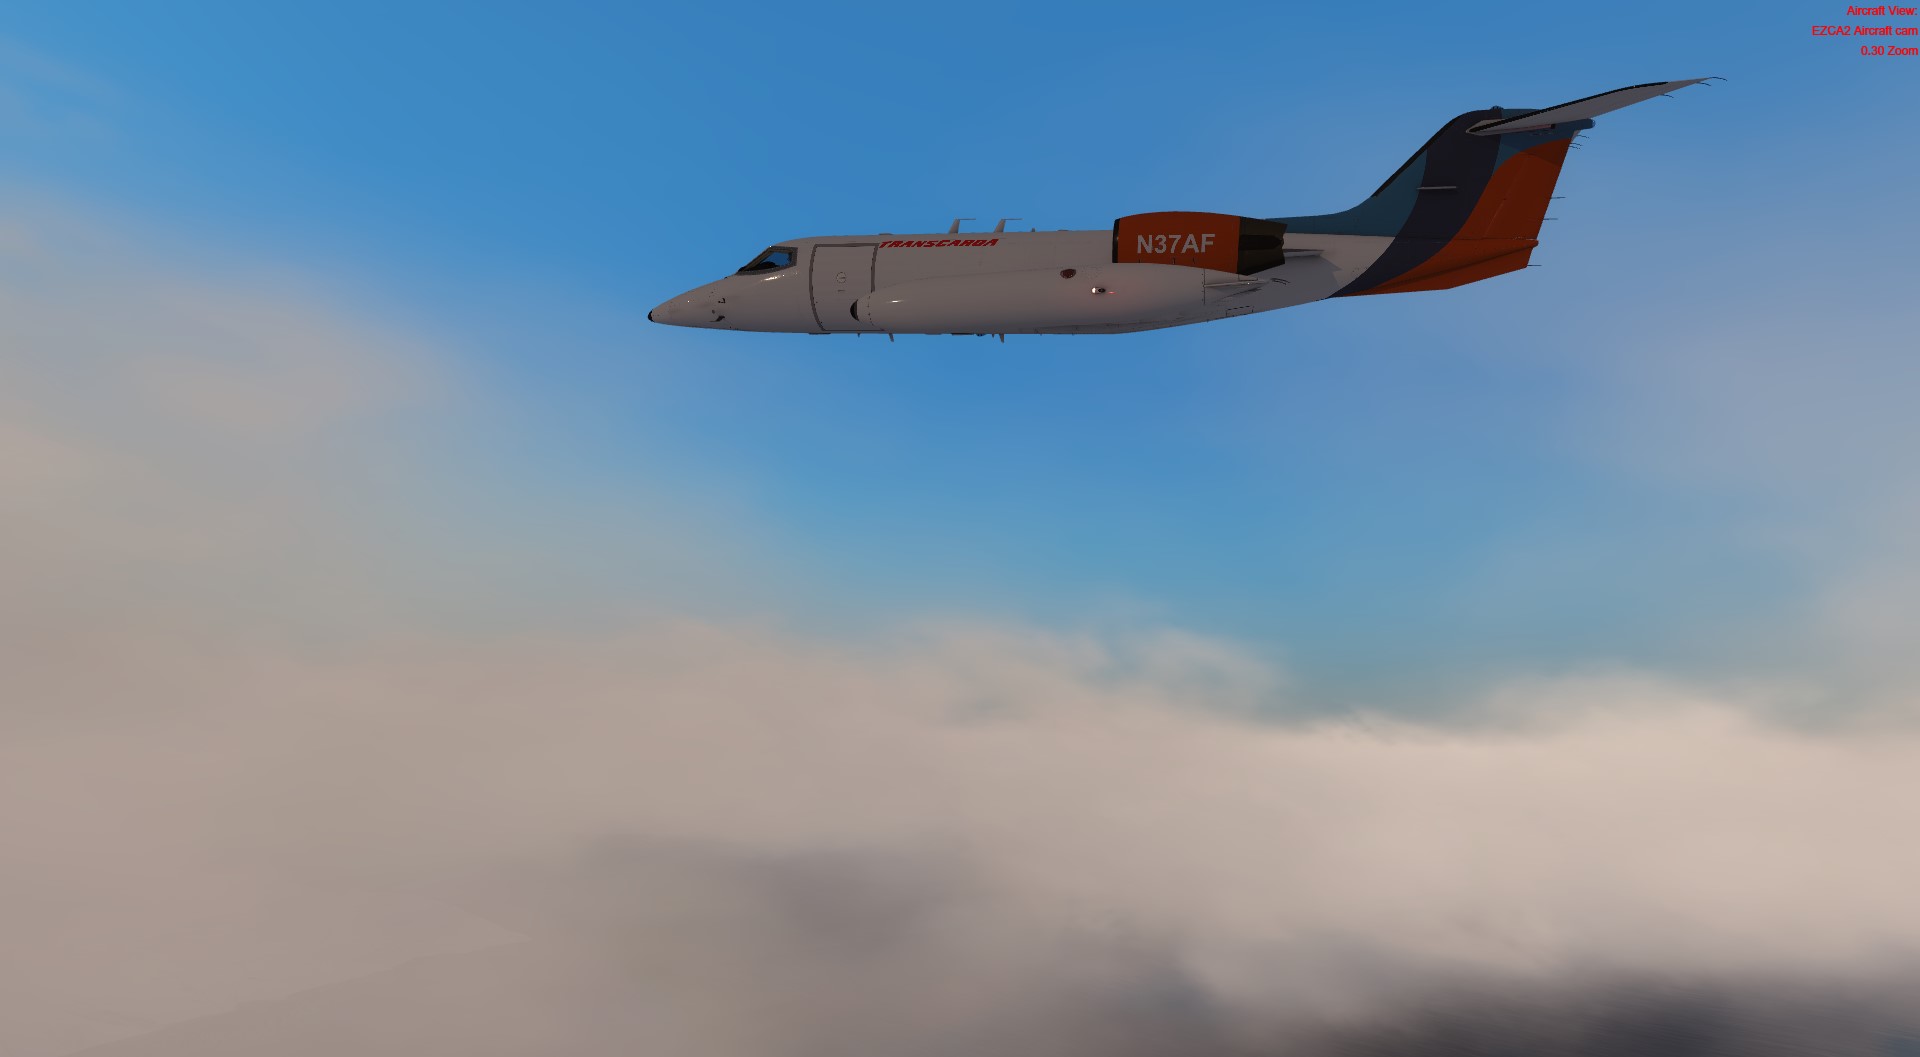 Flysimware – Learjet 35A 评测与冰岛送货之旅-5285 